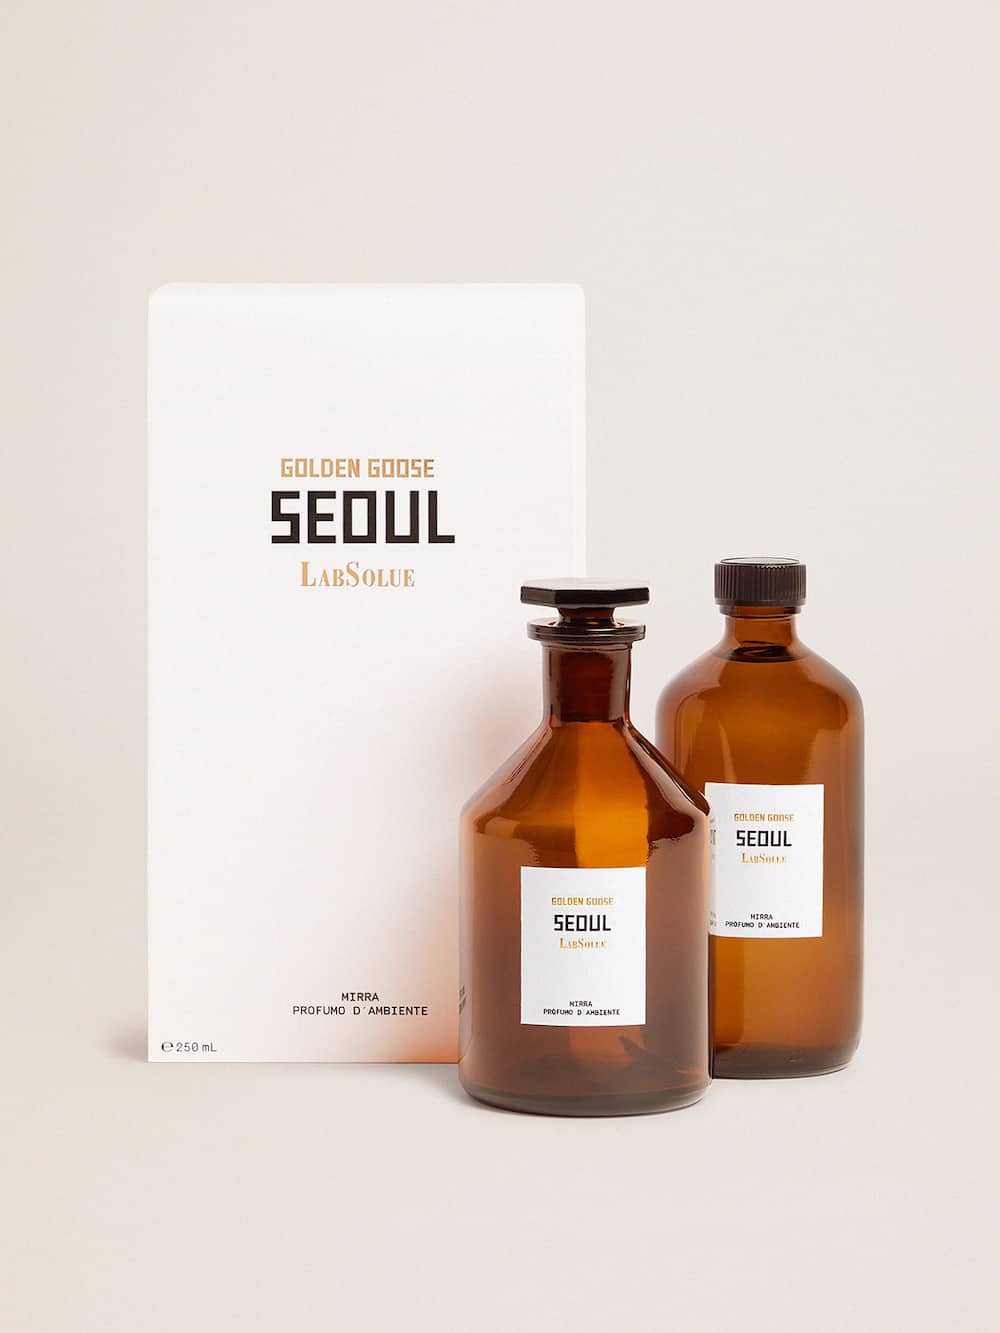 Golden Goose - Seoul Essence Myrrh Diffuser 250 ml in 